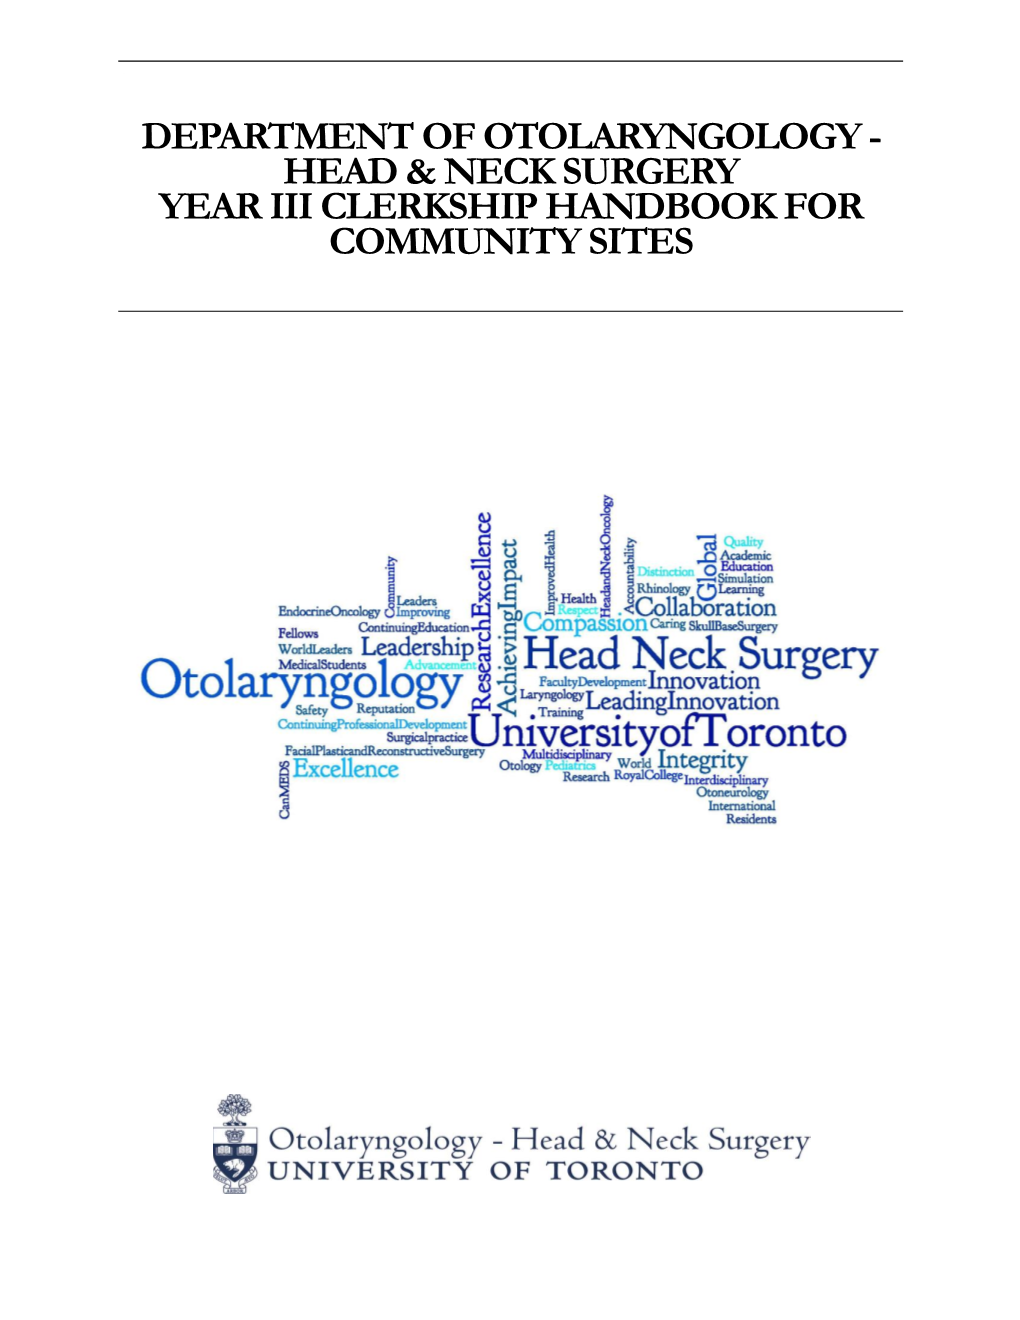 Department of Otolaryngology - Head & Neck Surgery Year Iii Clerkship Handbook for Community Sites